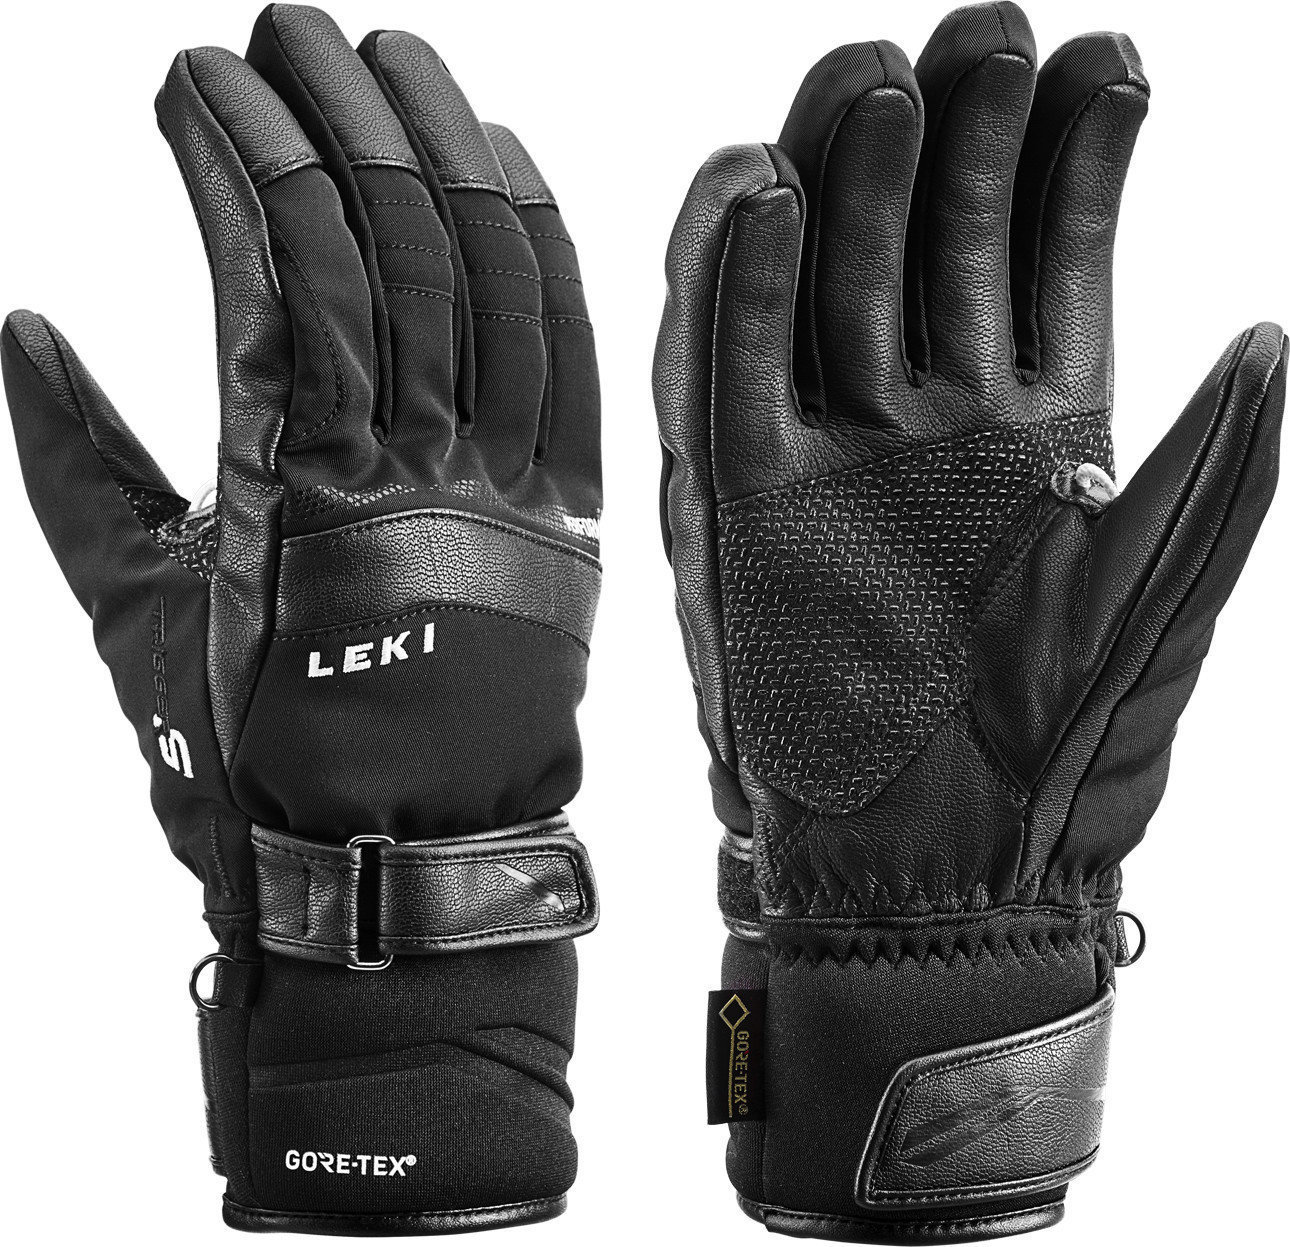 SkI Handschuhe Leki Performance S GTX Black 10 SkI Handschuhe